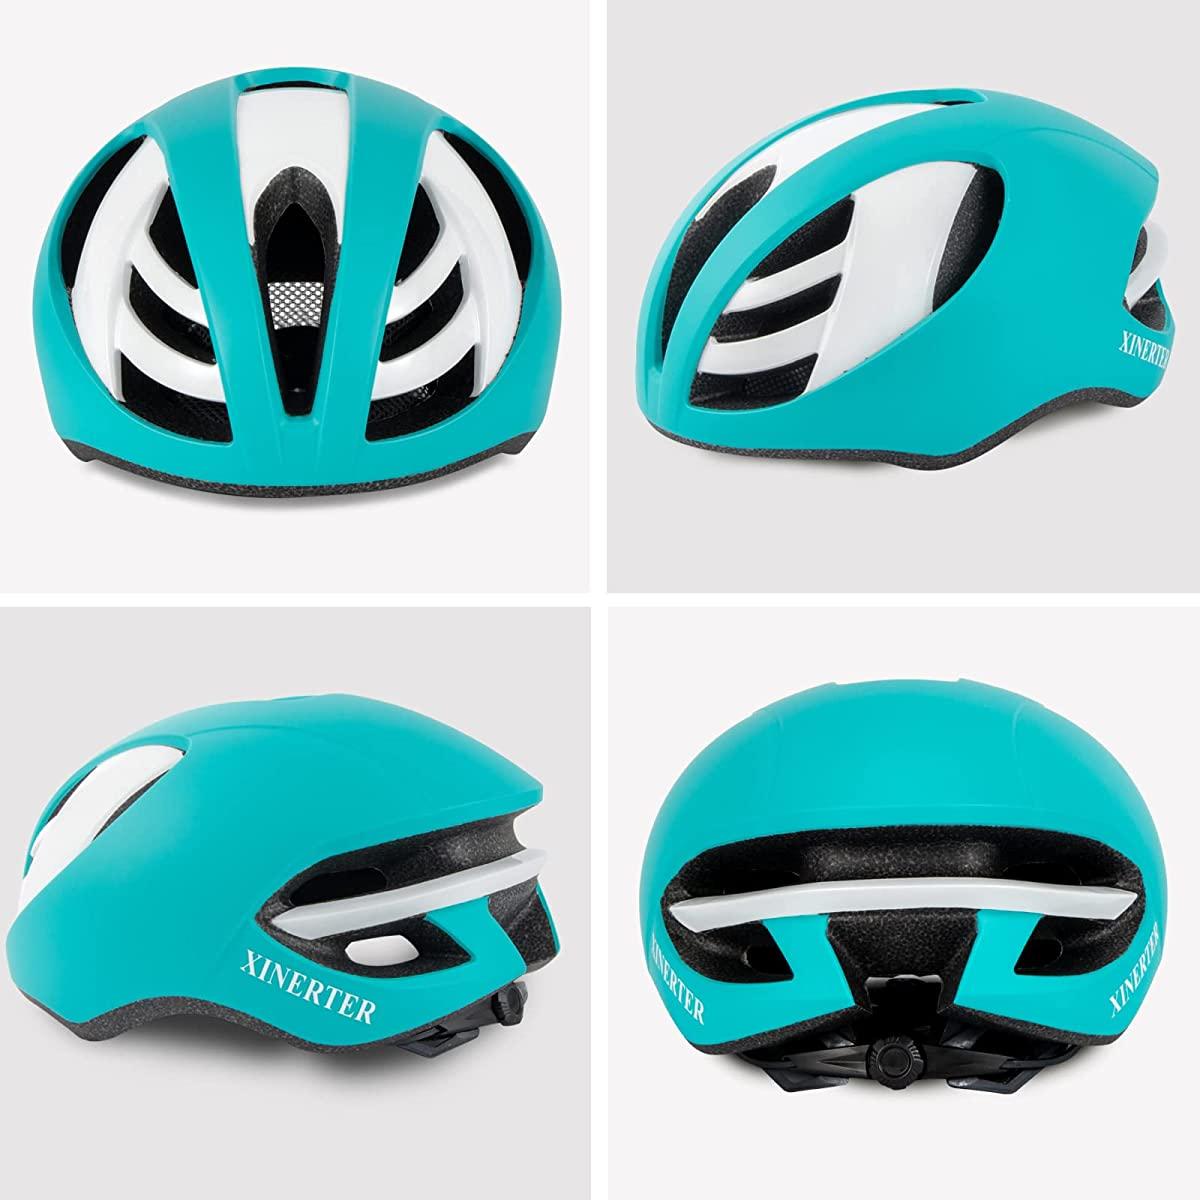 Xinerter bicycle helmets (side view)